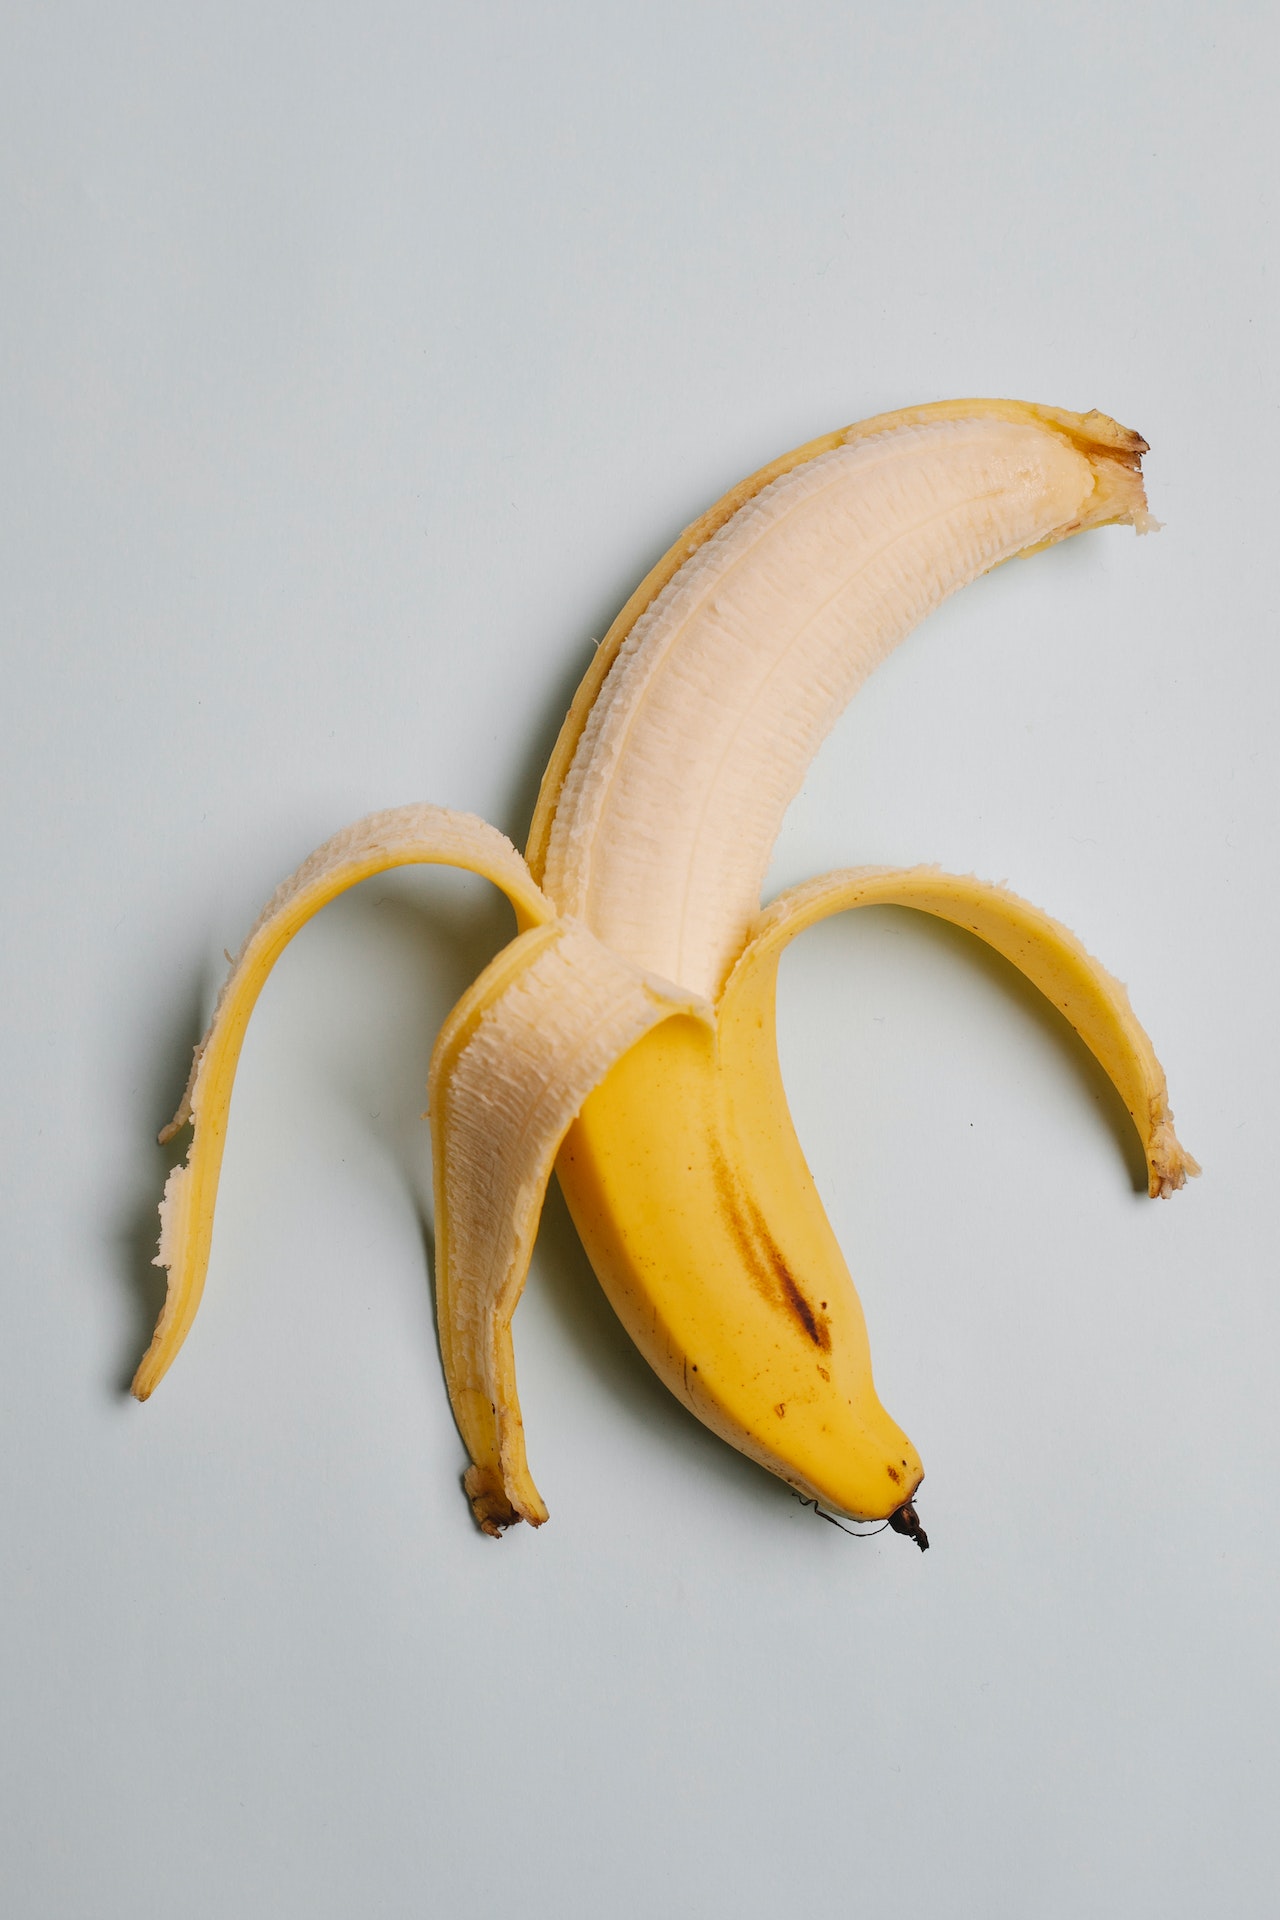 A peeled yellow banana